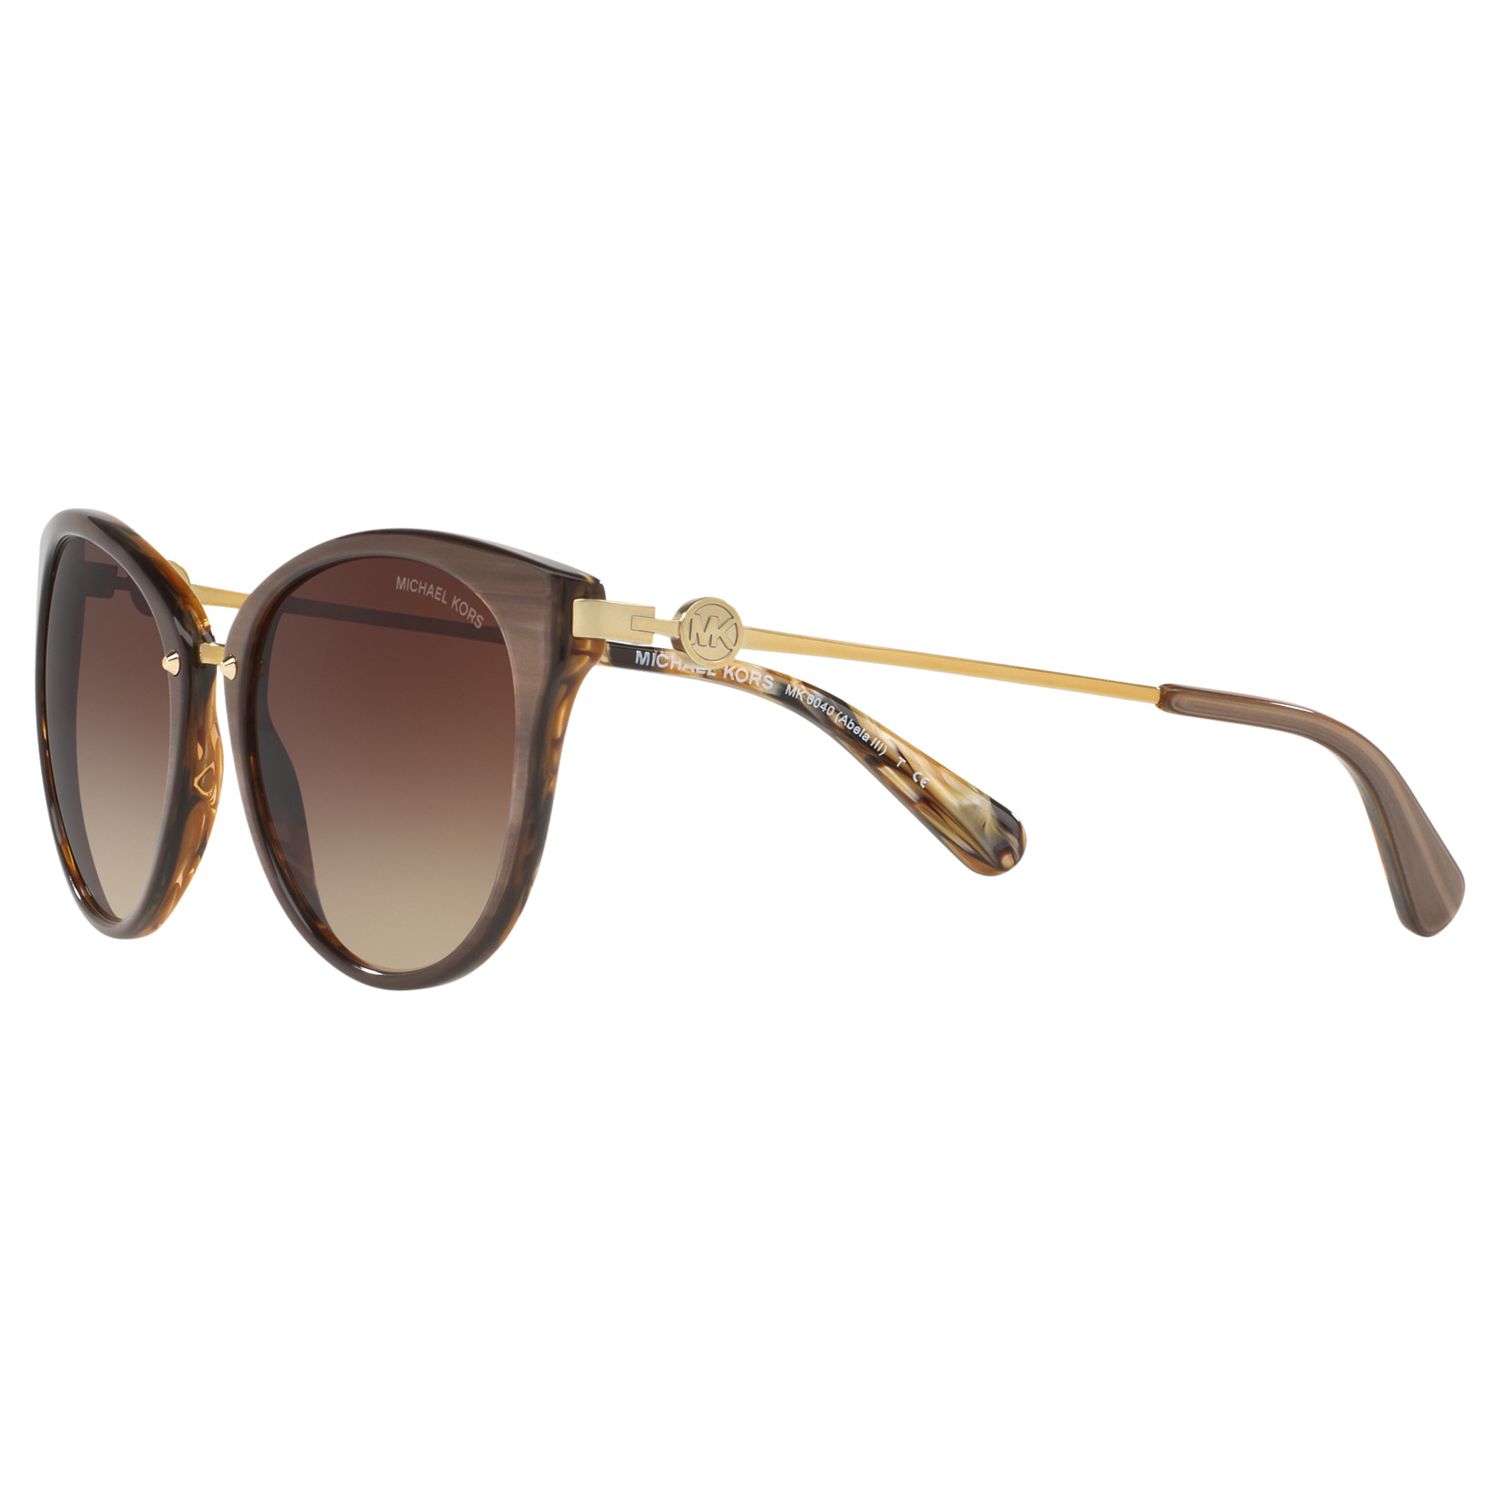 Buy Michael Kors MK6040 Abela III Round Sunglasses, Brushed Brown/Brown Gradient Online at johnlewis.com